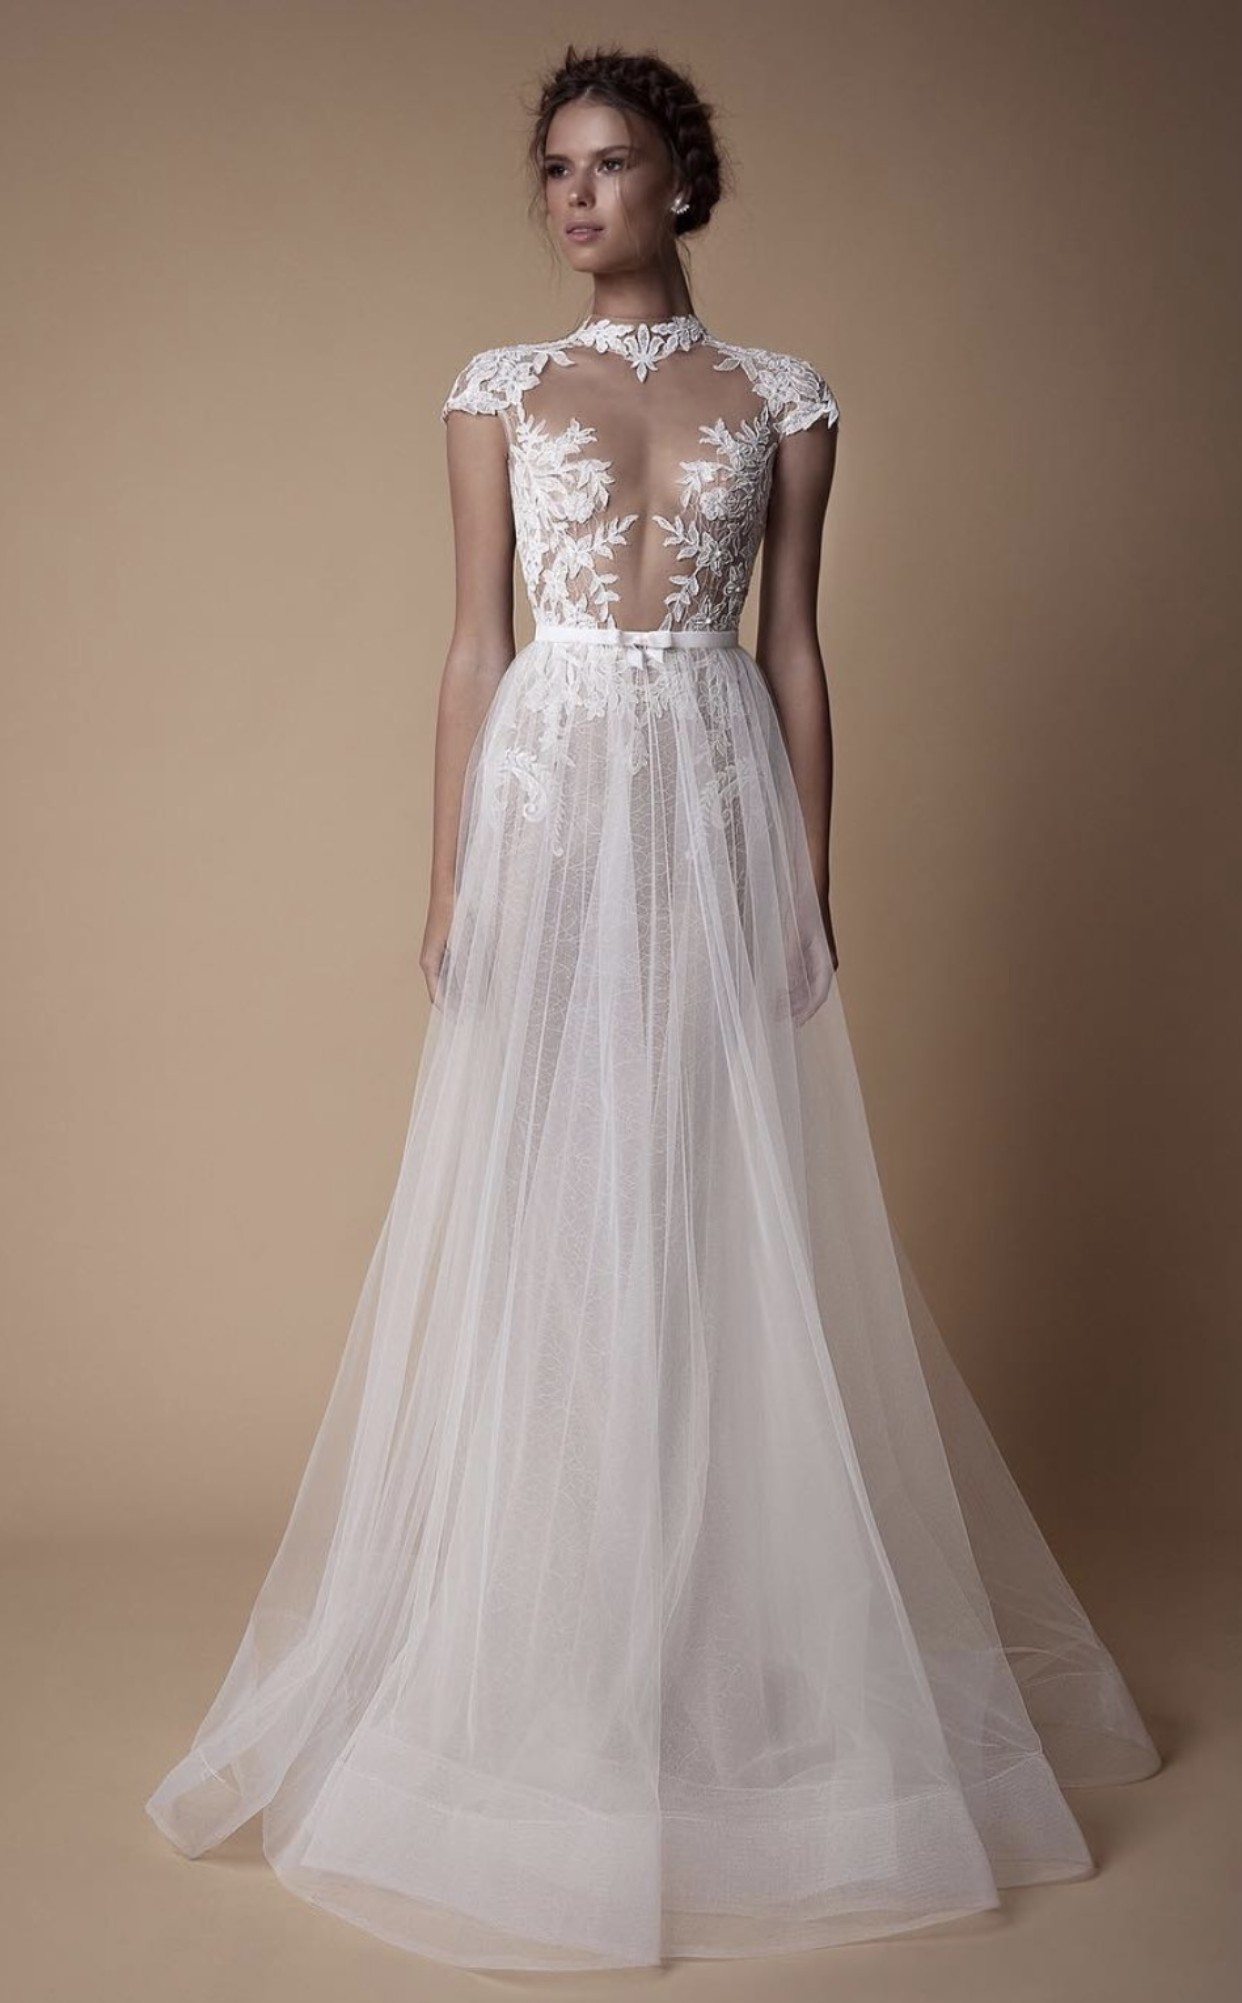 Muse By Berta Sample Wedding Dress Save 58% - Stillwhite